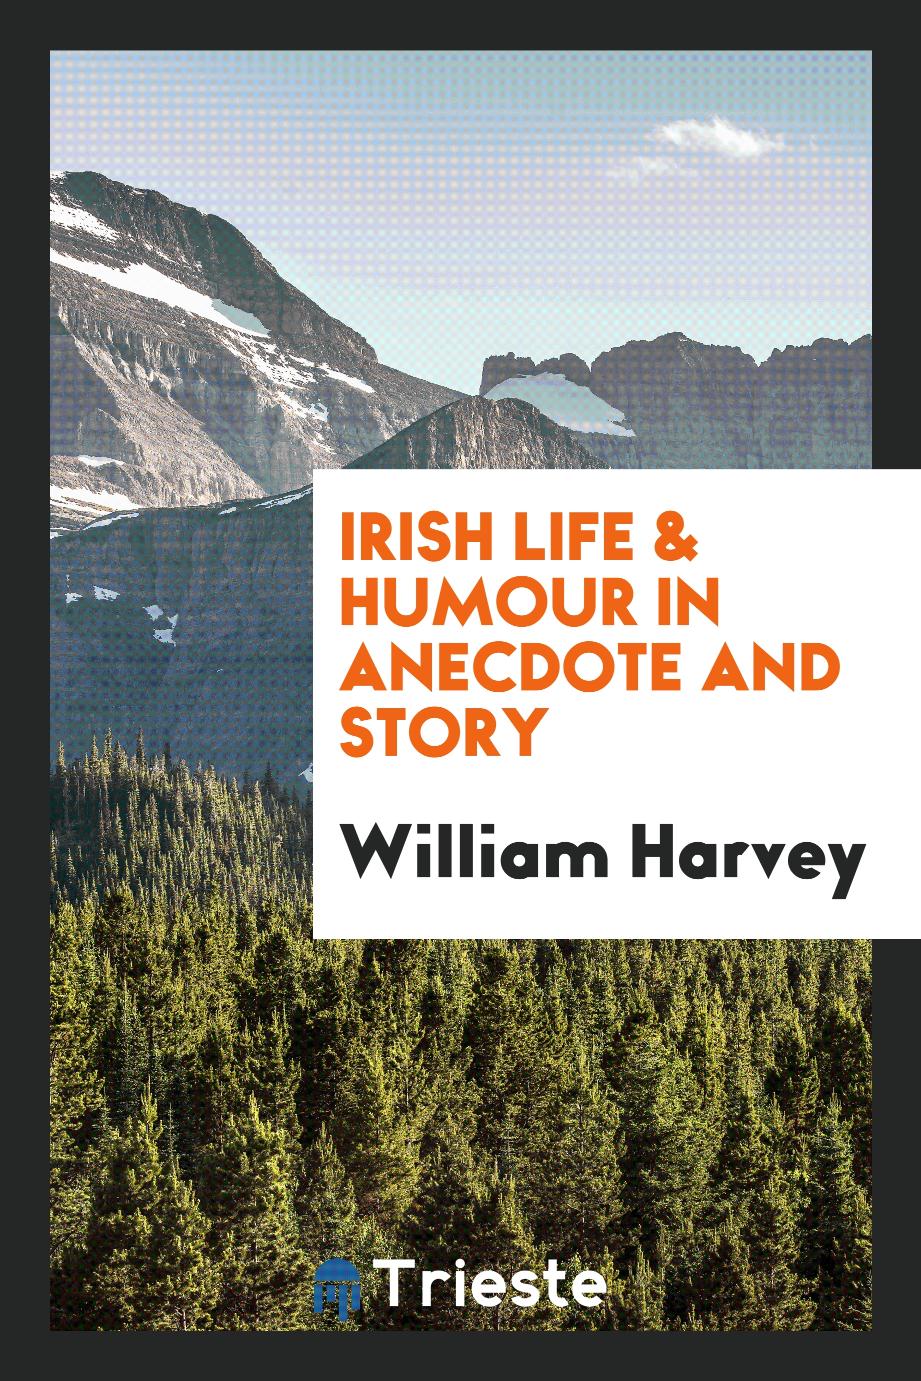 Irish life & humour in anecdote and story